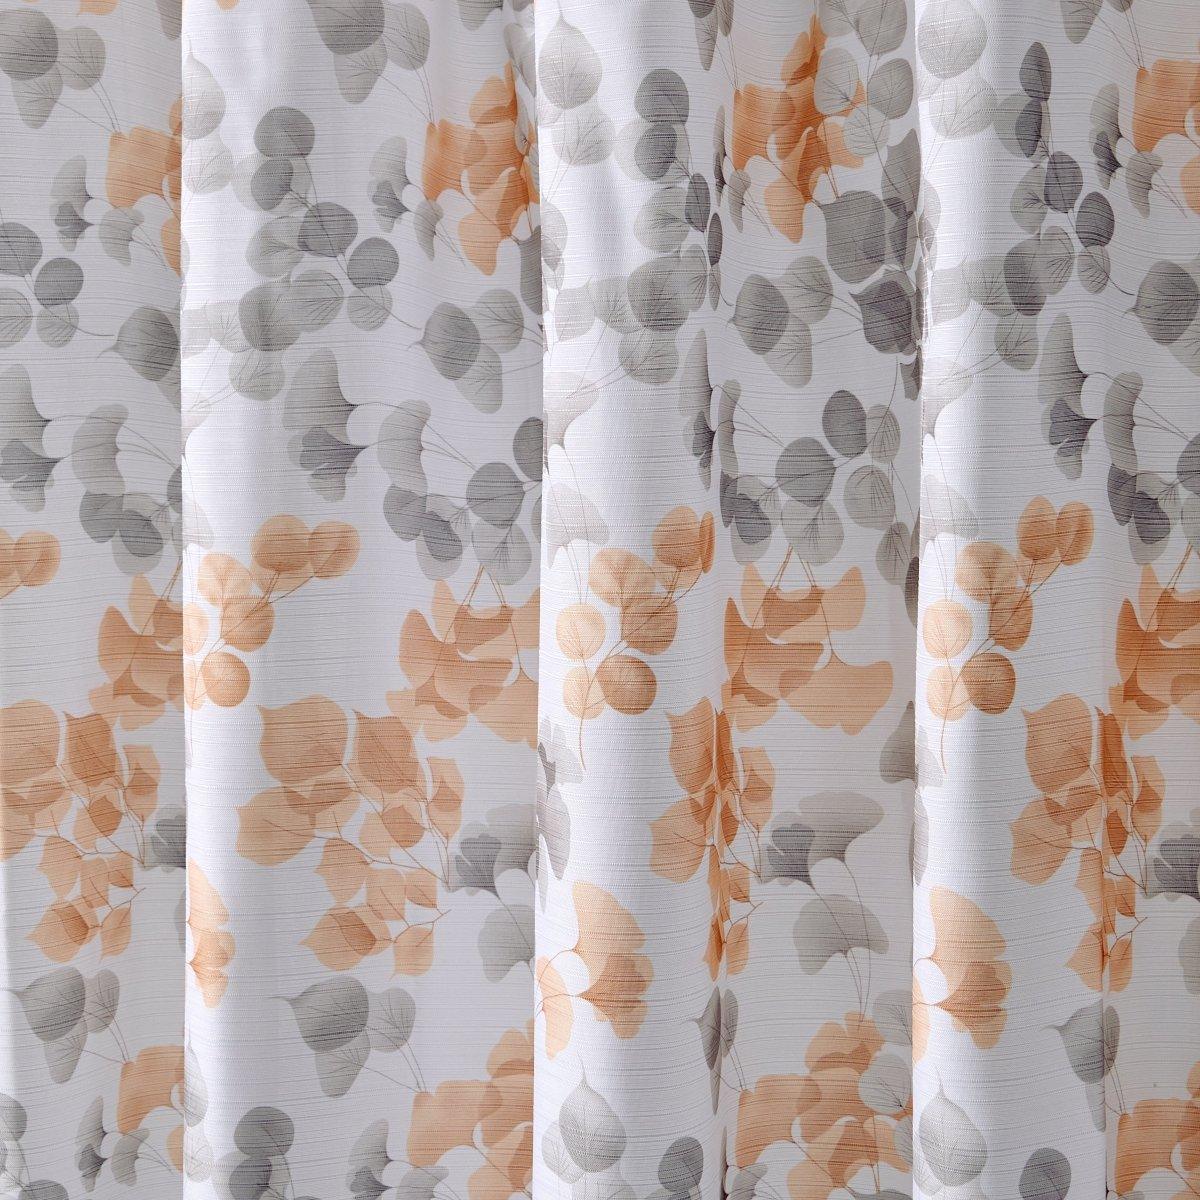 14pc Hooks with Liner Polyester Shower Curtain Set | Spirit Linen